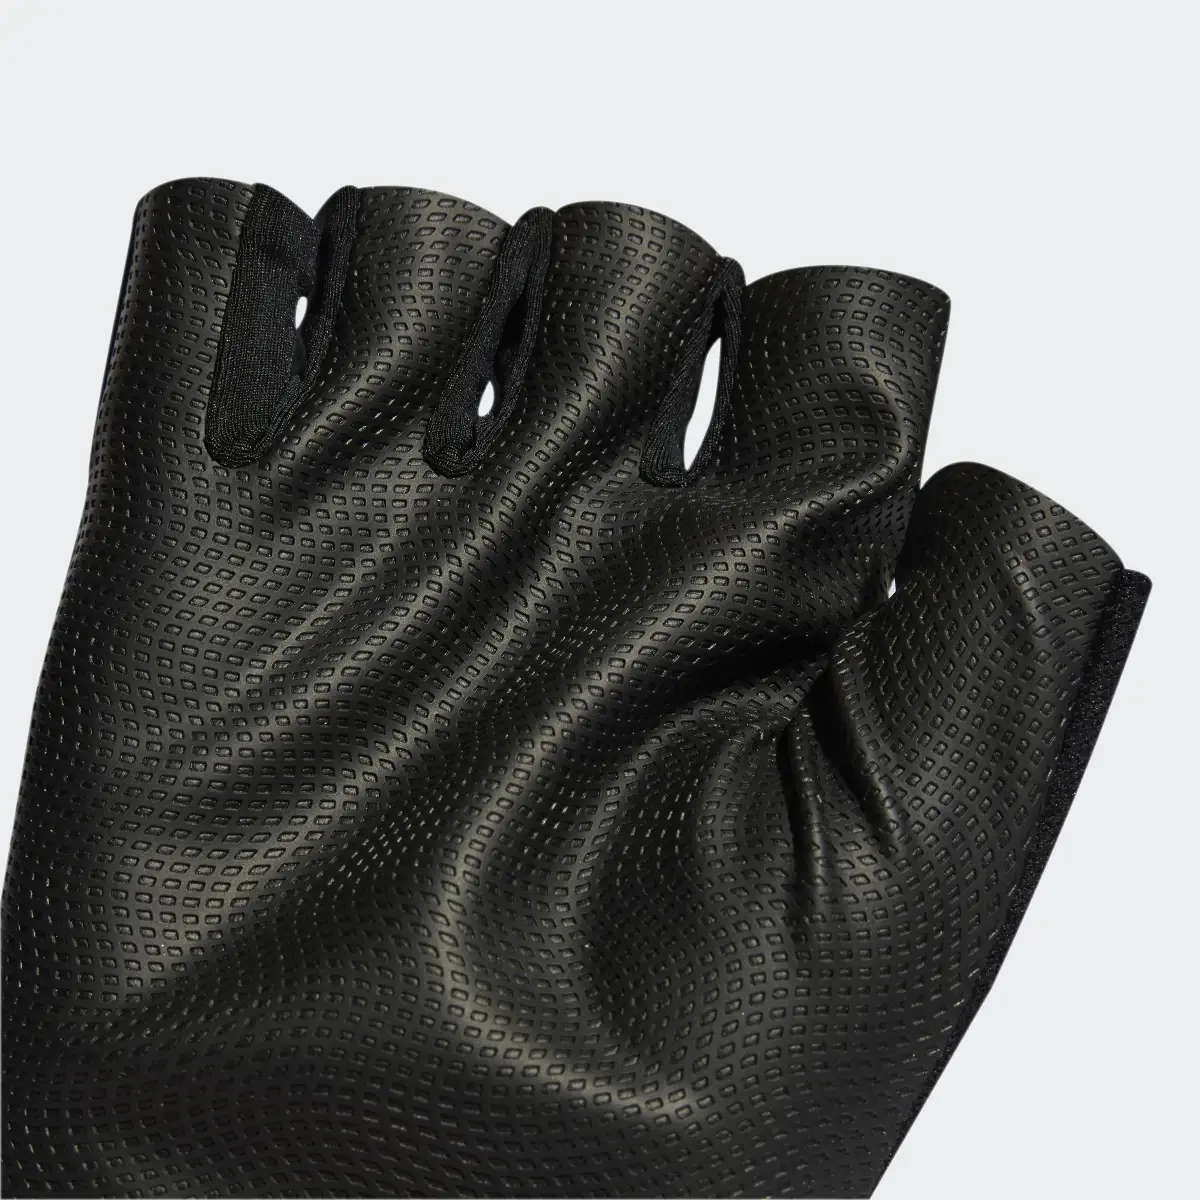 Adidas Training Handschuhe. 3